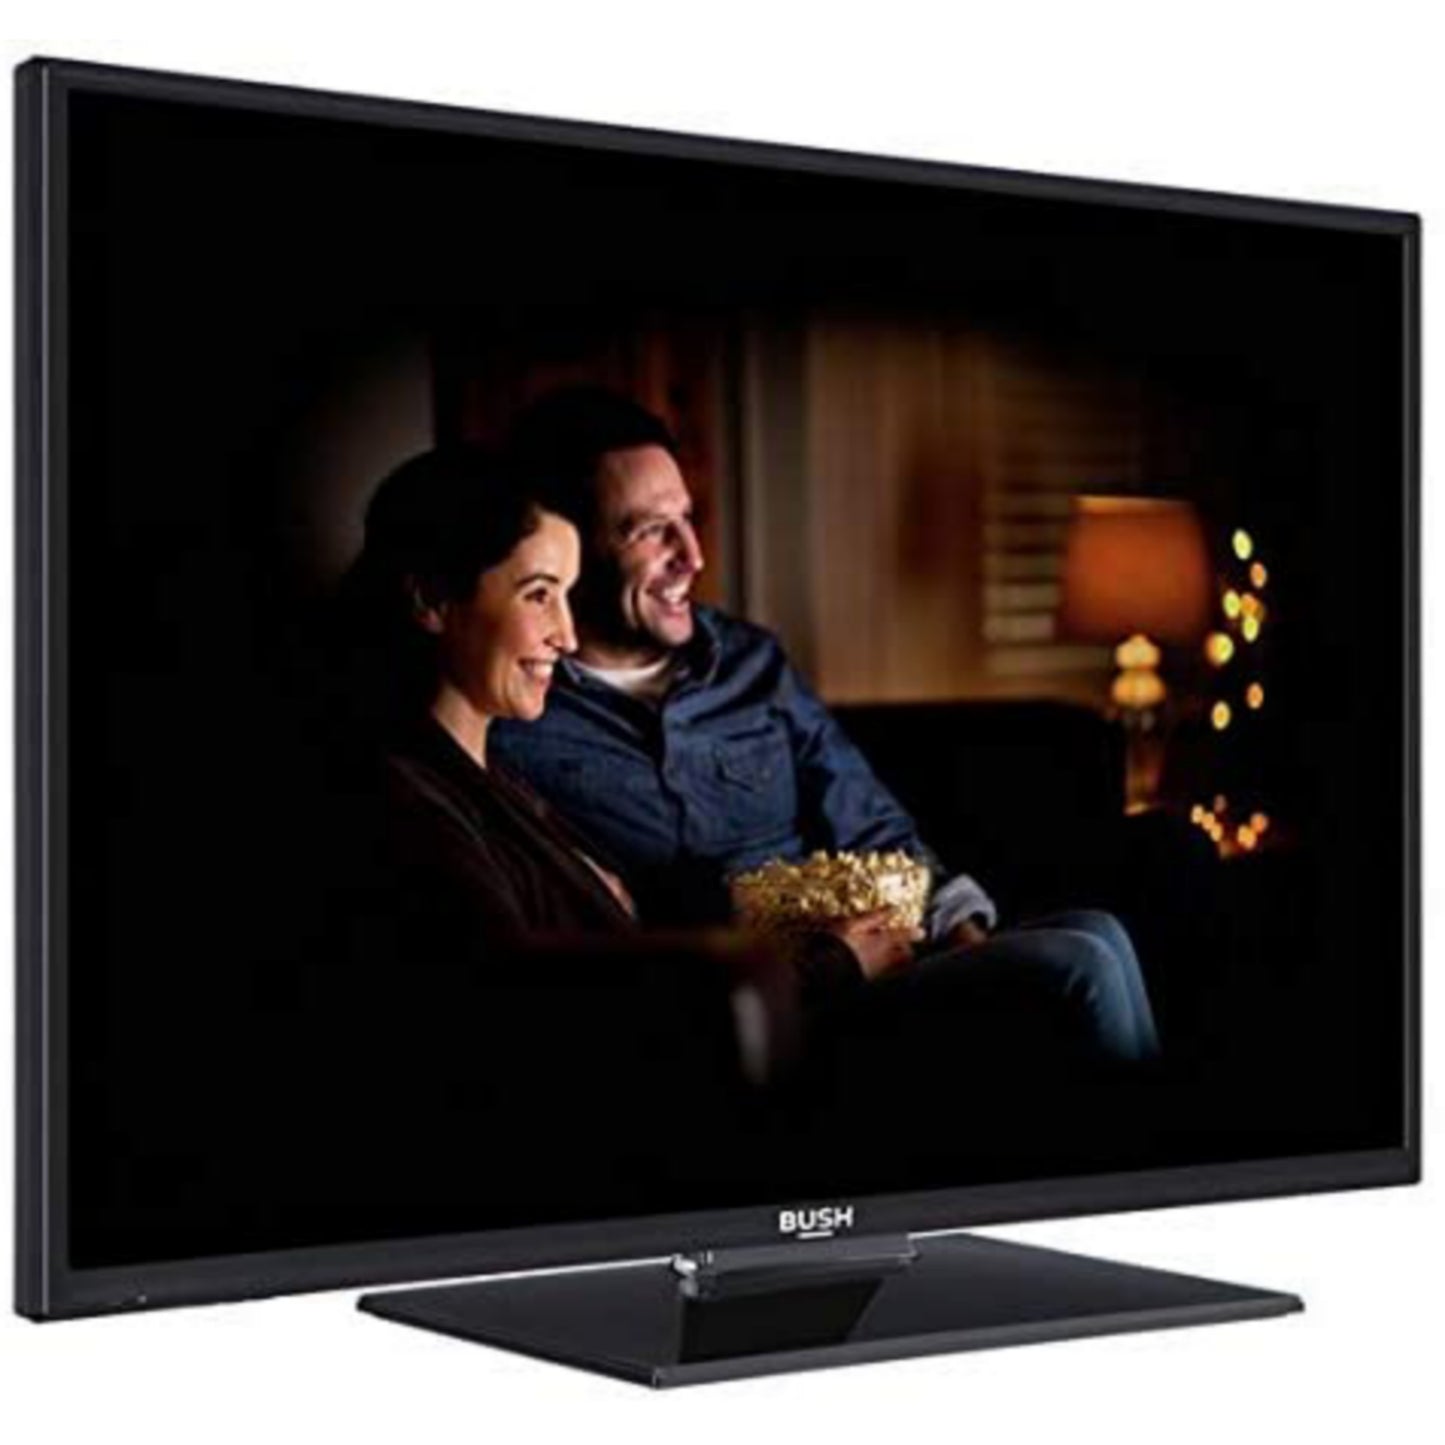 BUSH 32 Inch Full HD 1080p LED TV - London Used